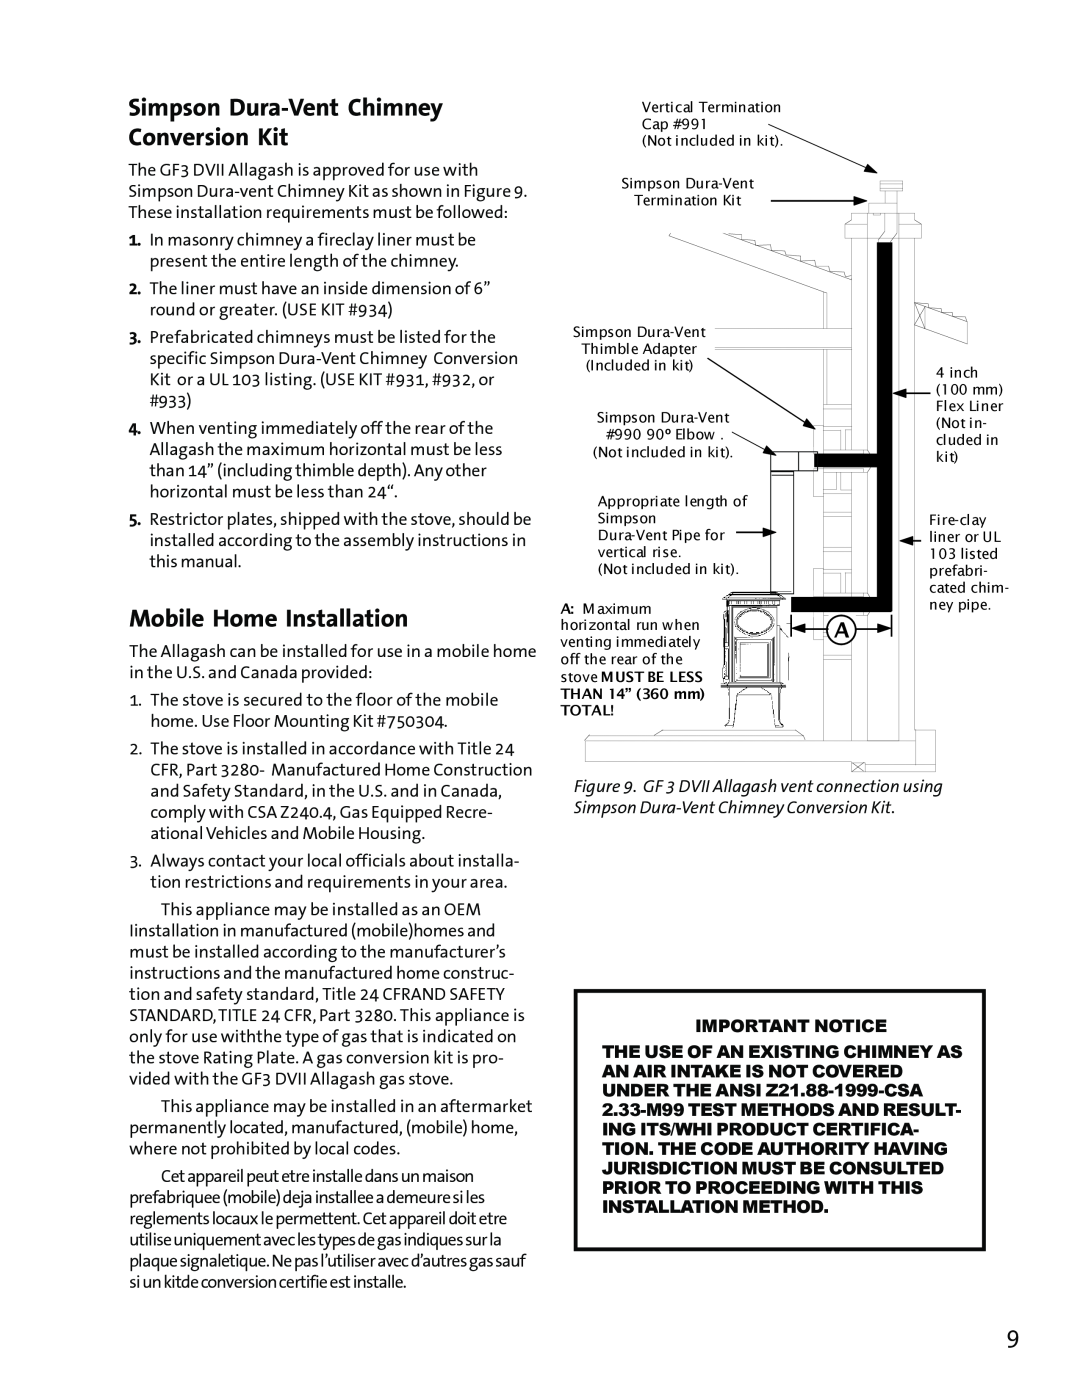 Jotul GF3 DVII manual Simpson Dura-VentChimney Conversion Kit, Mobile Home Installation 